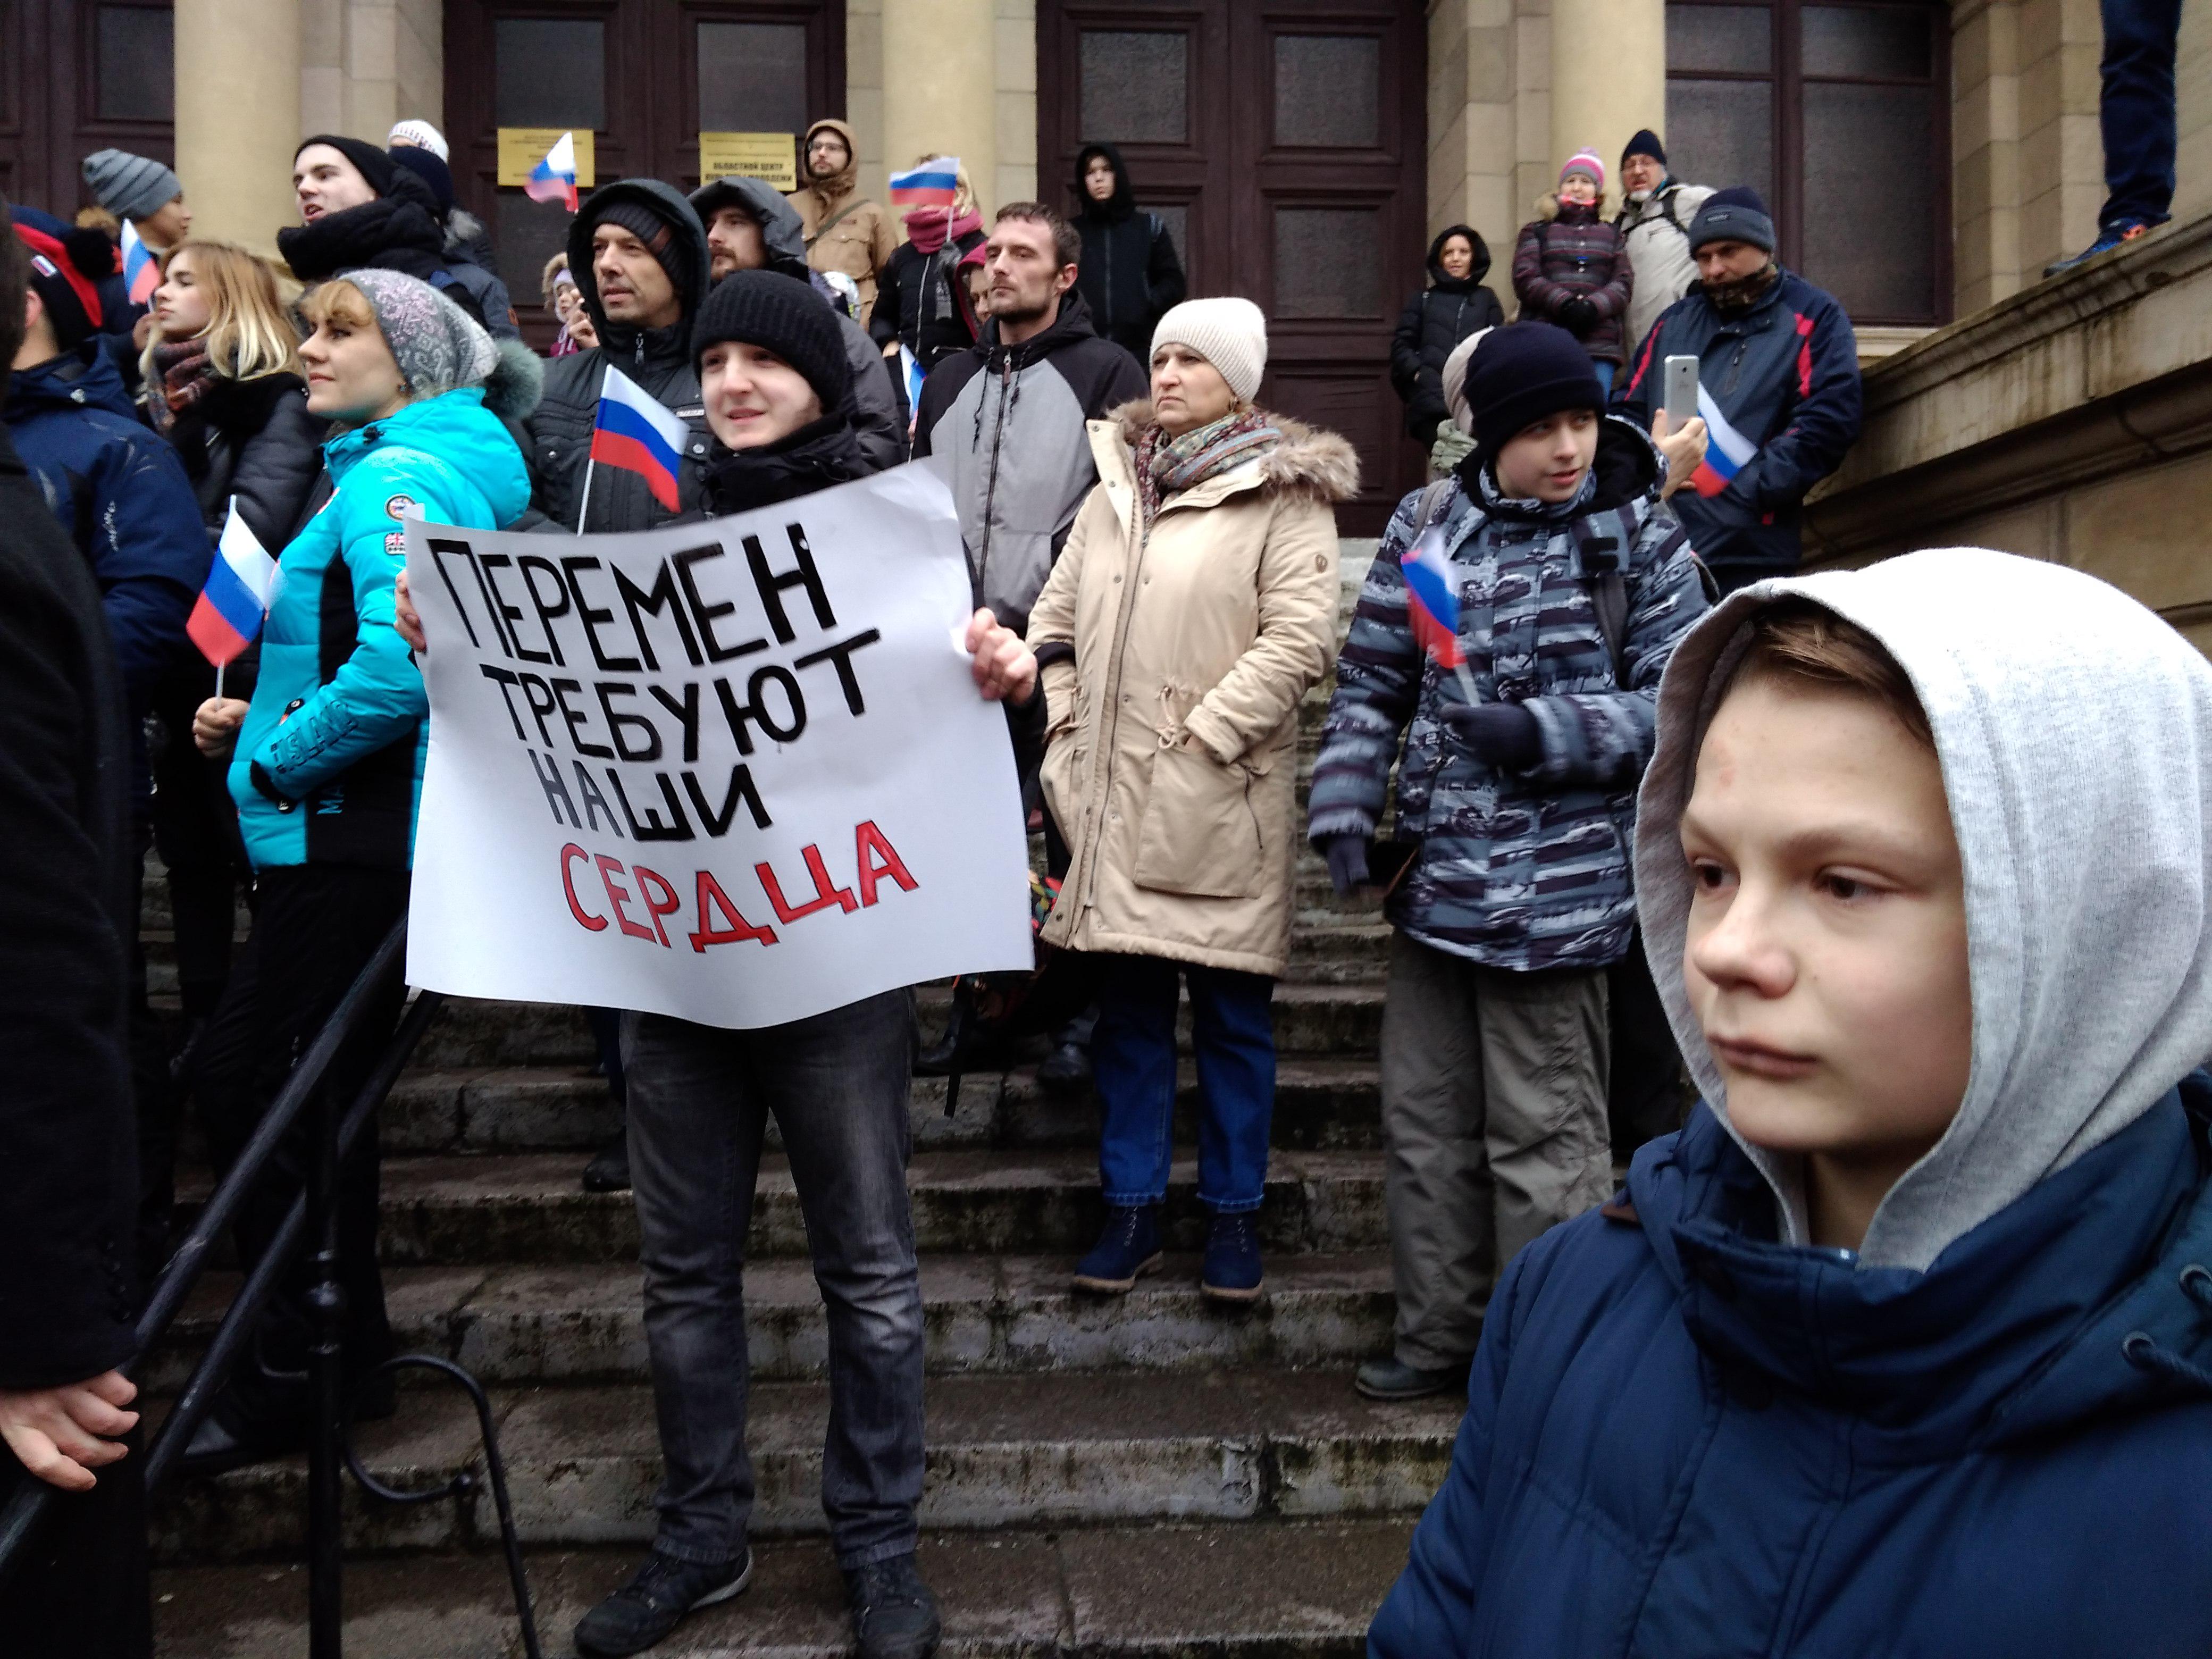 Митинг стих. Дети на митинге Навального. Школьники на митинге. Молодежь на митинге. Молодежь на митингах Навального.